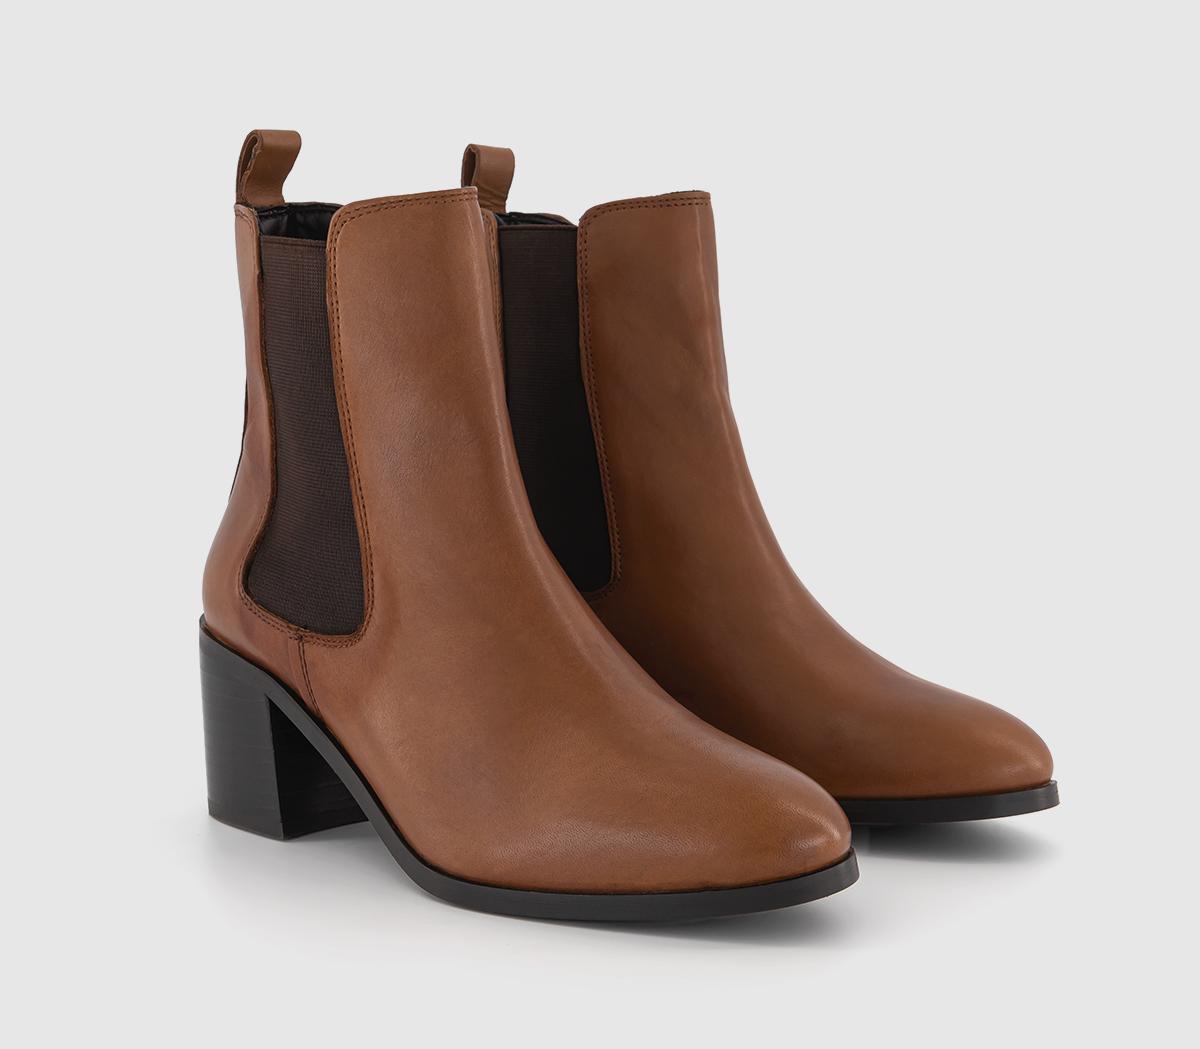 OFFICE Womens Aspect Block Heel Chelsea Boots Tan Leather, 5